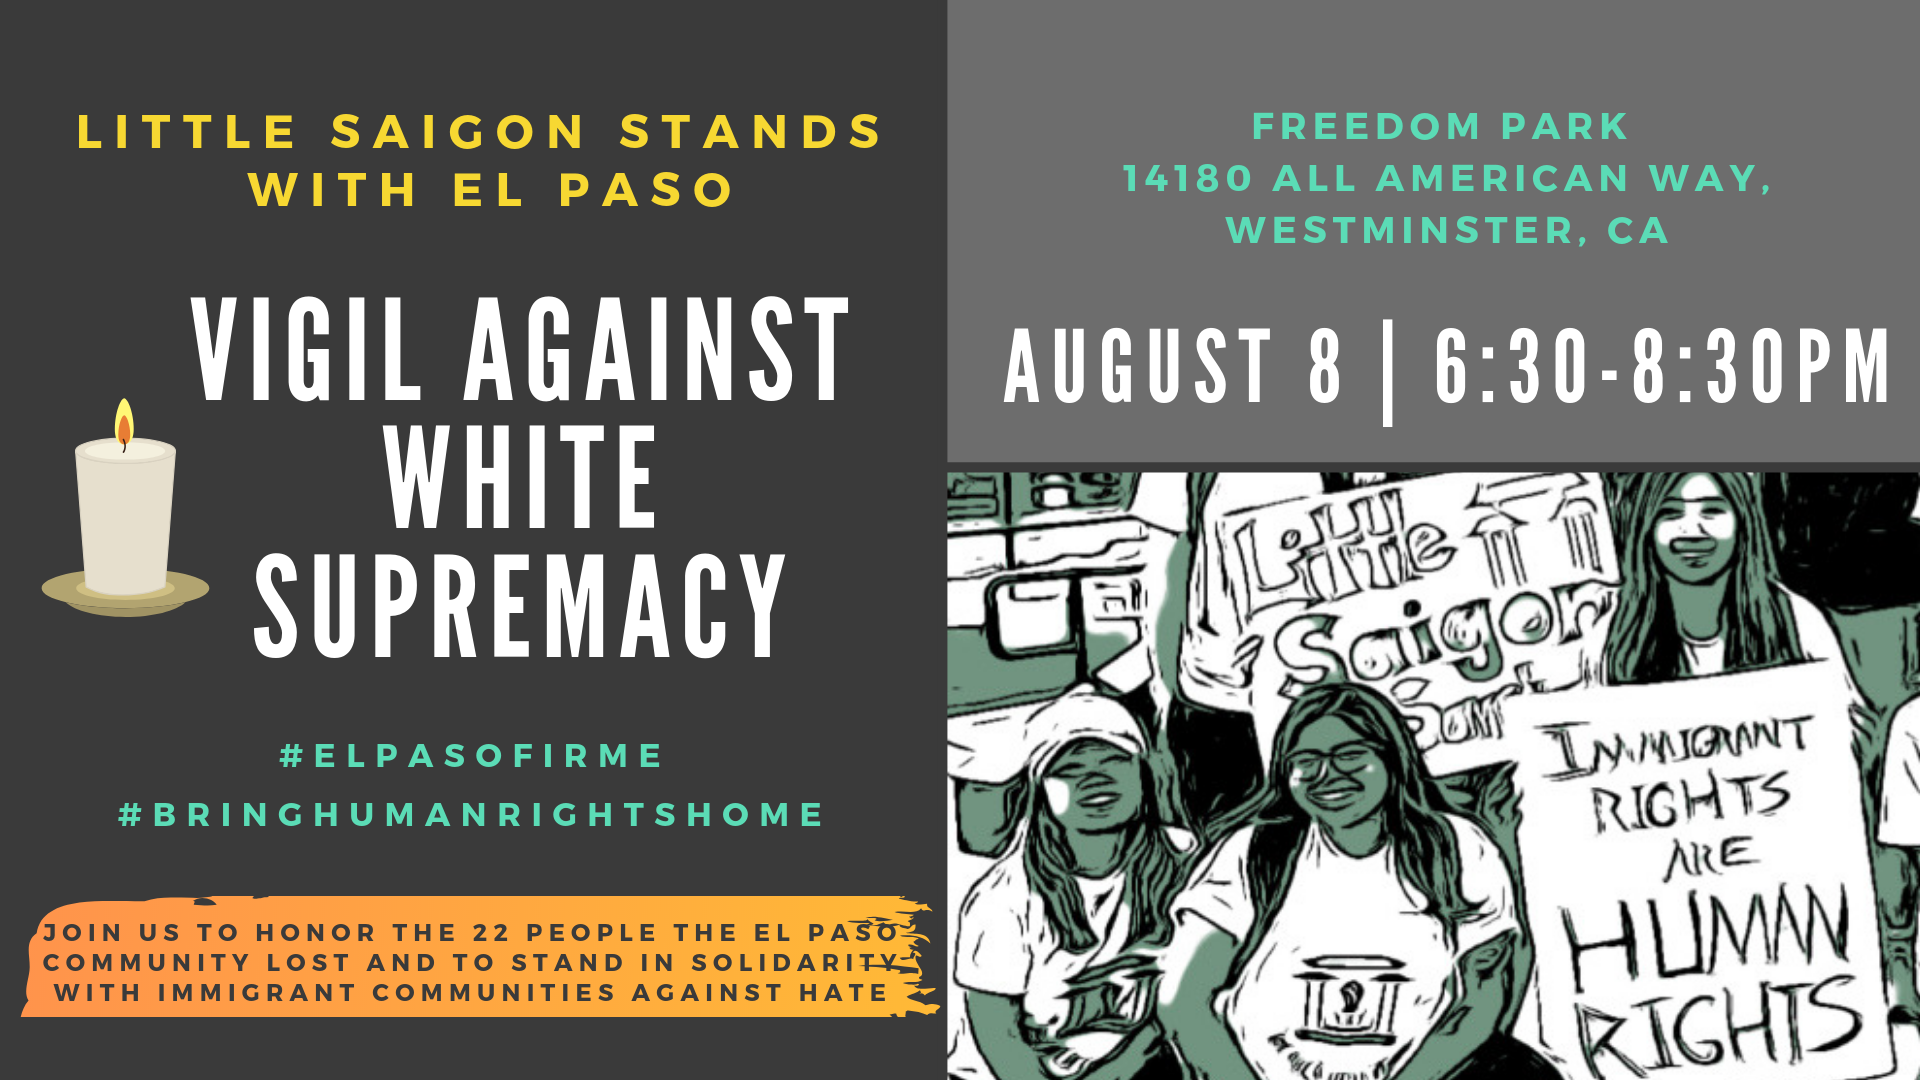 RELEASE: Little Saigon Stands with El Paso: Vigil Against White Supremacy